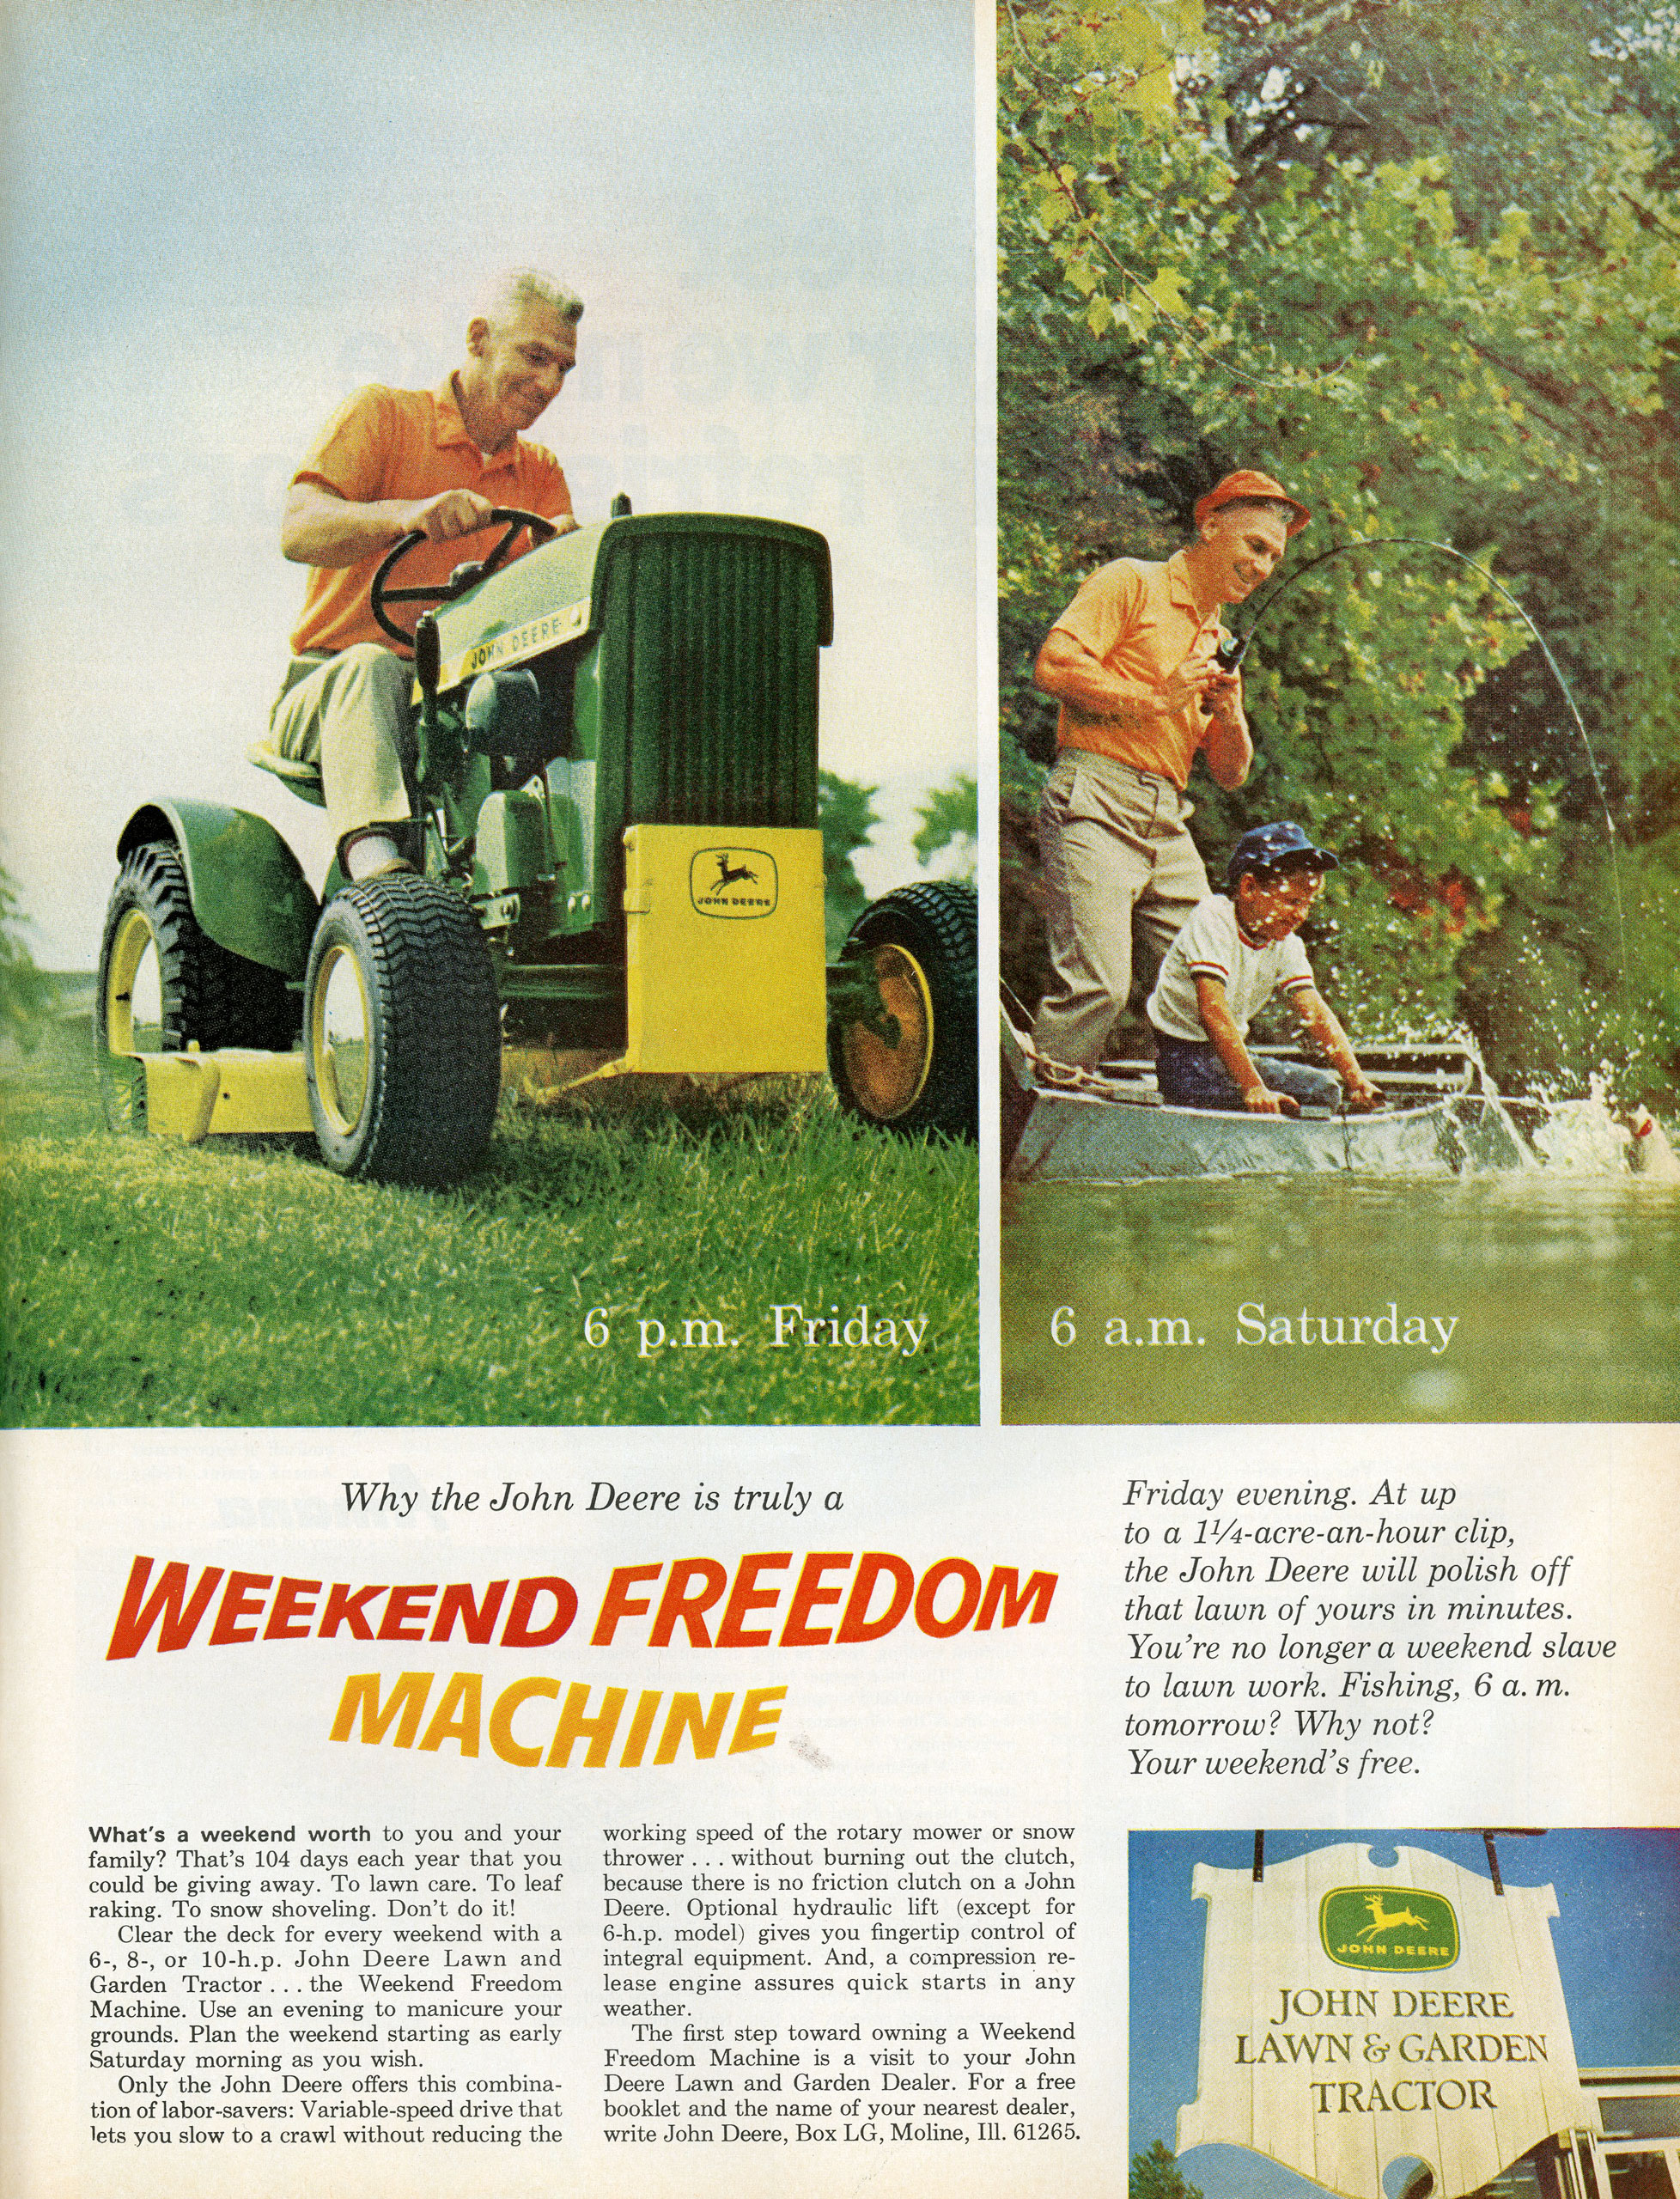 LIFE Magazine John Deere ad, 1967